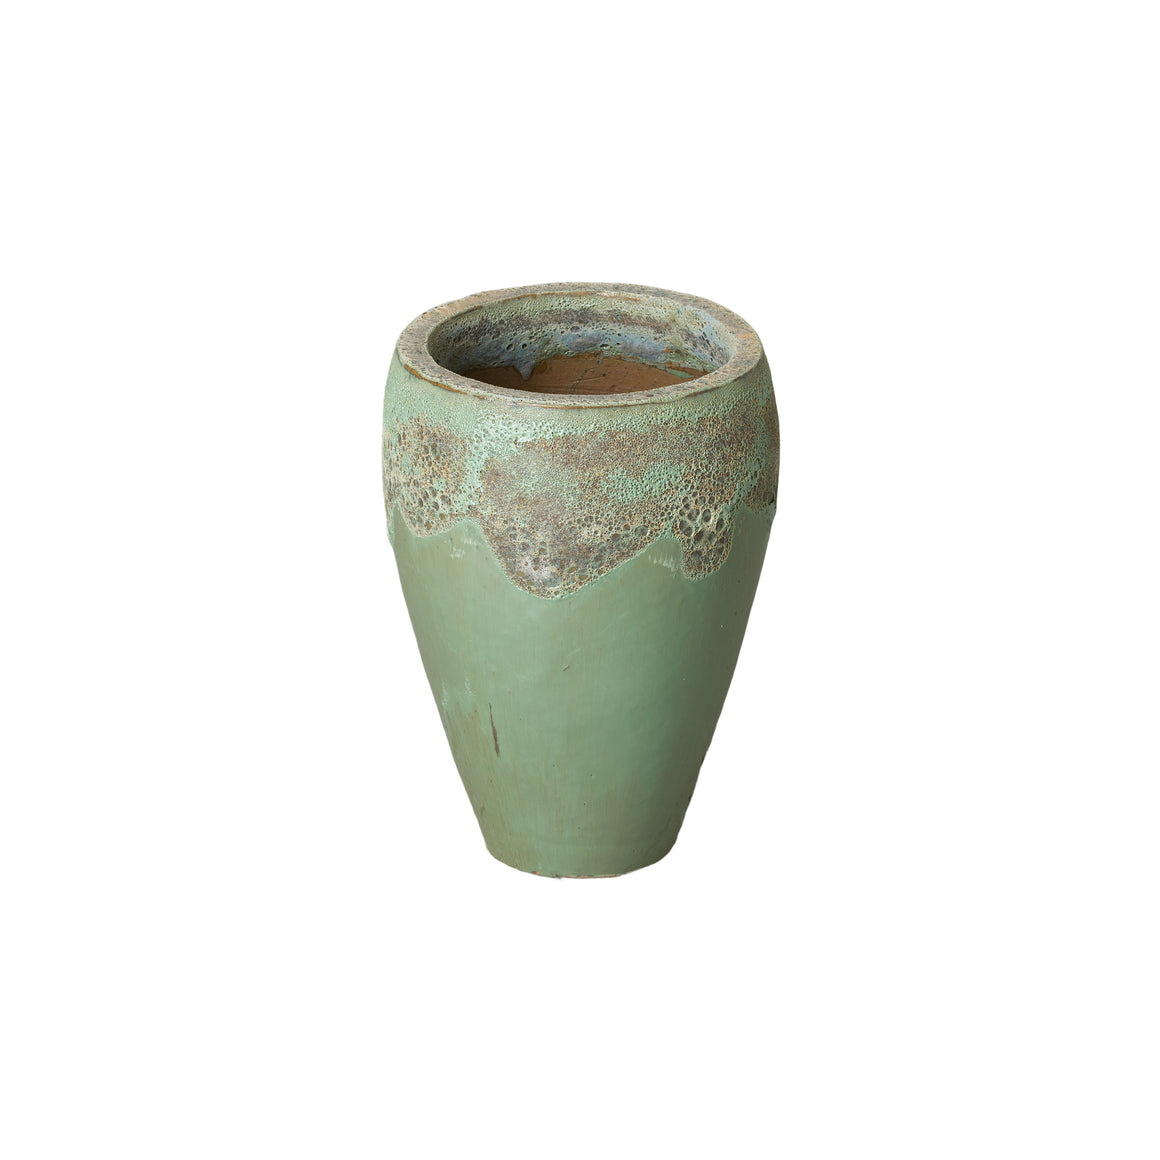 Round Ceramic Planter with a Reef/Spa Green Glaze